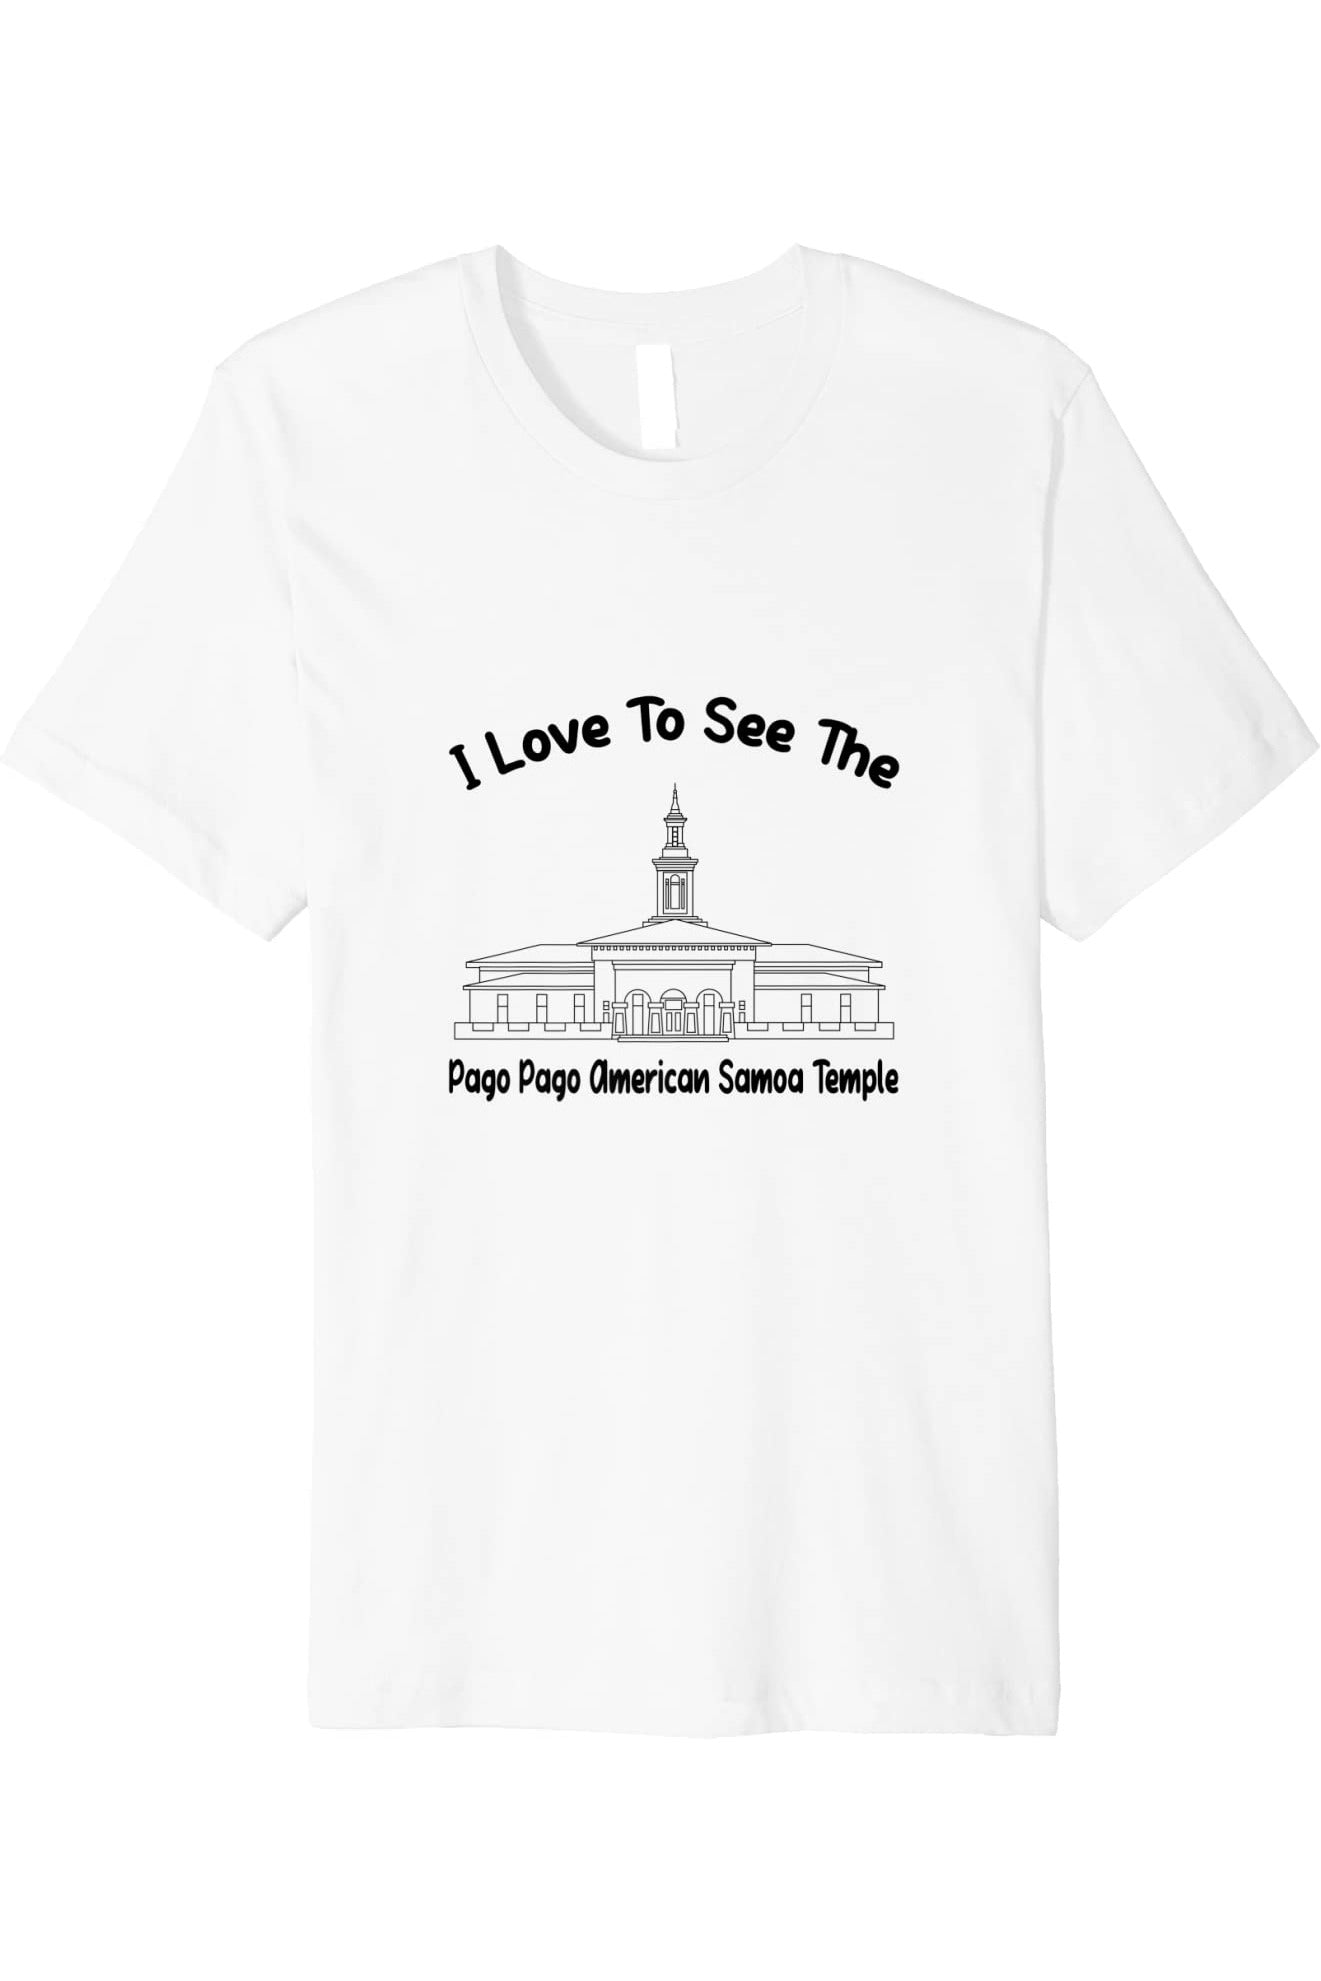 Pago Pago American Samoa Temple T-Shirt - Premium - Primary Style (English) US